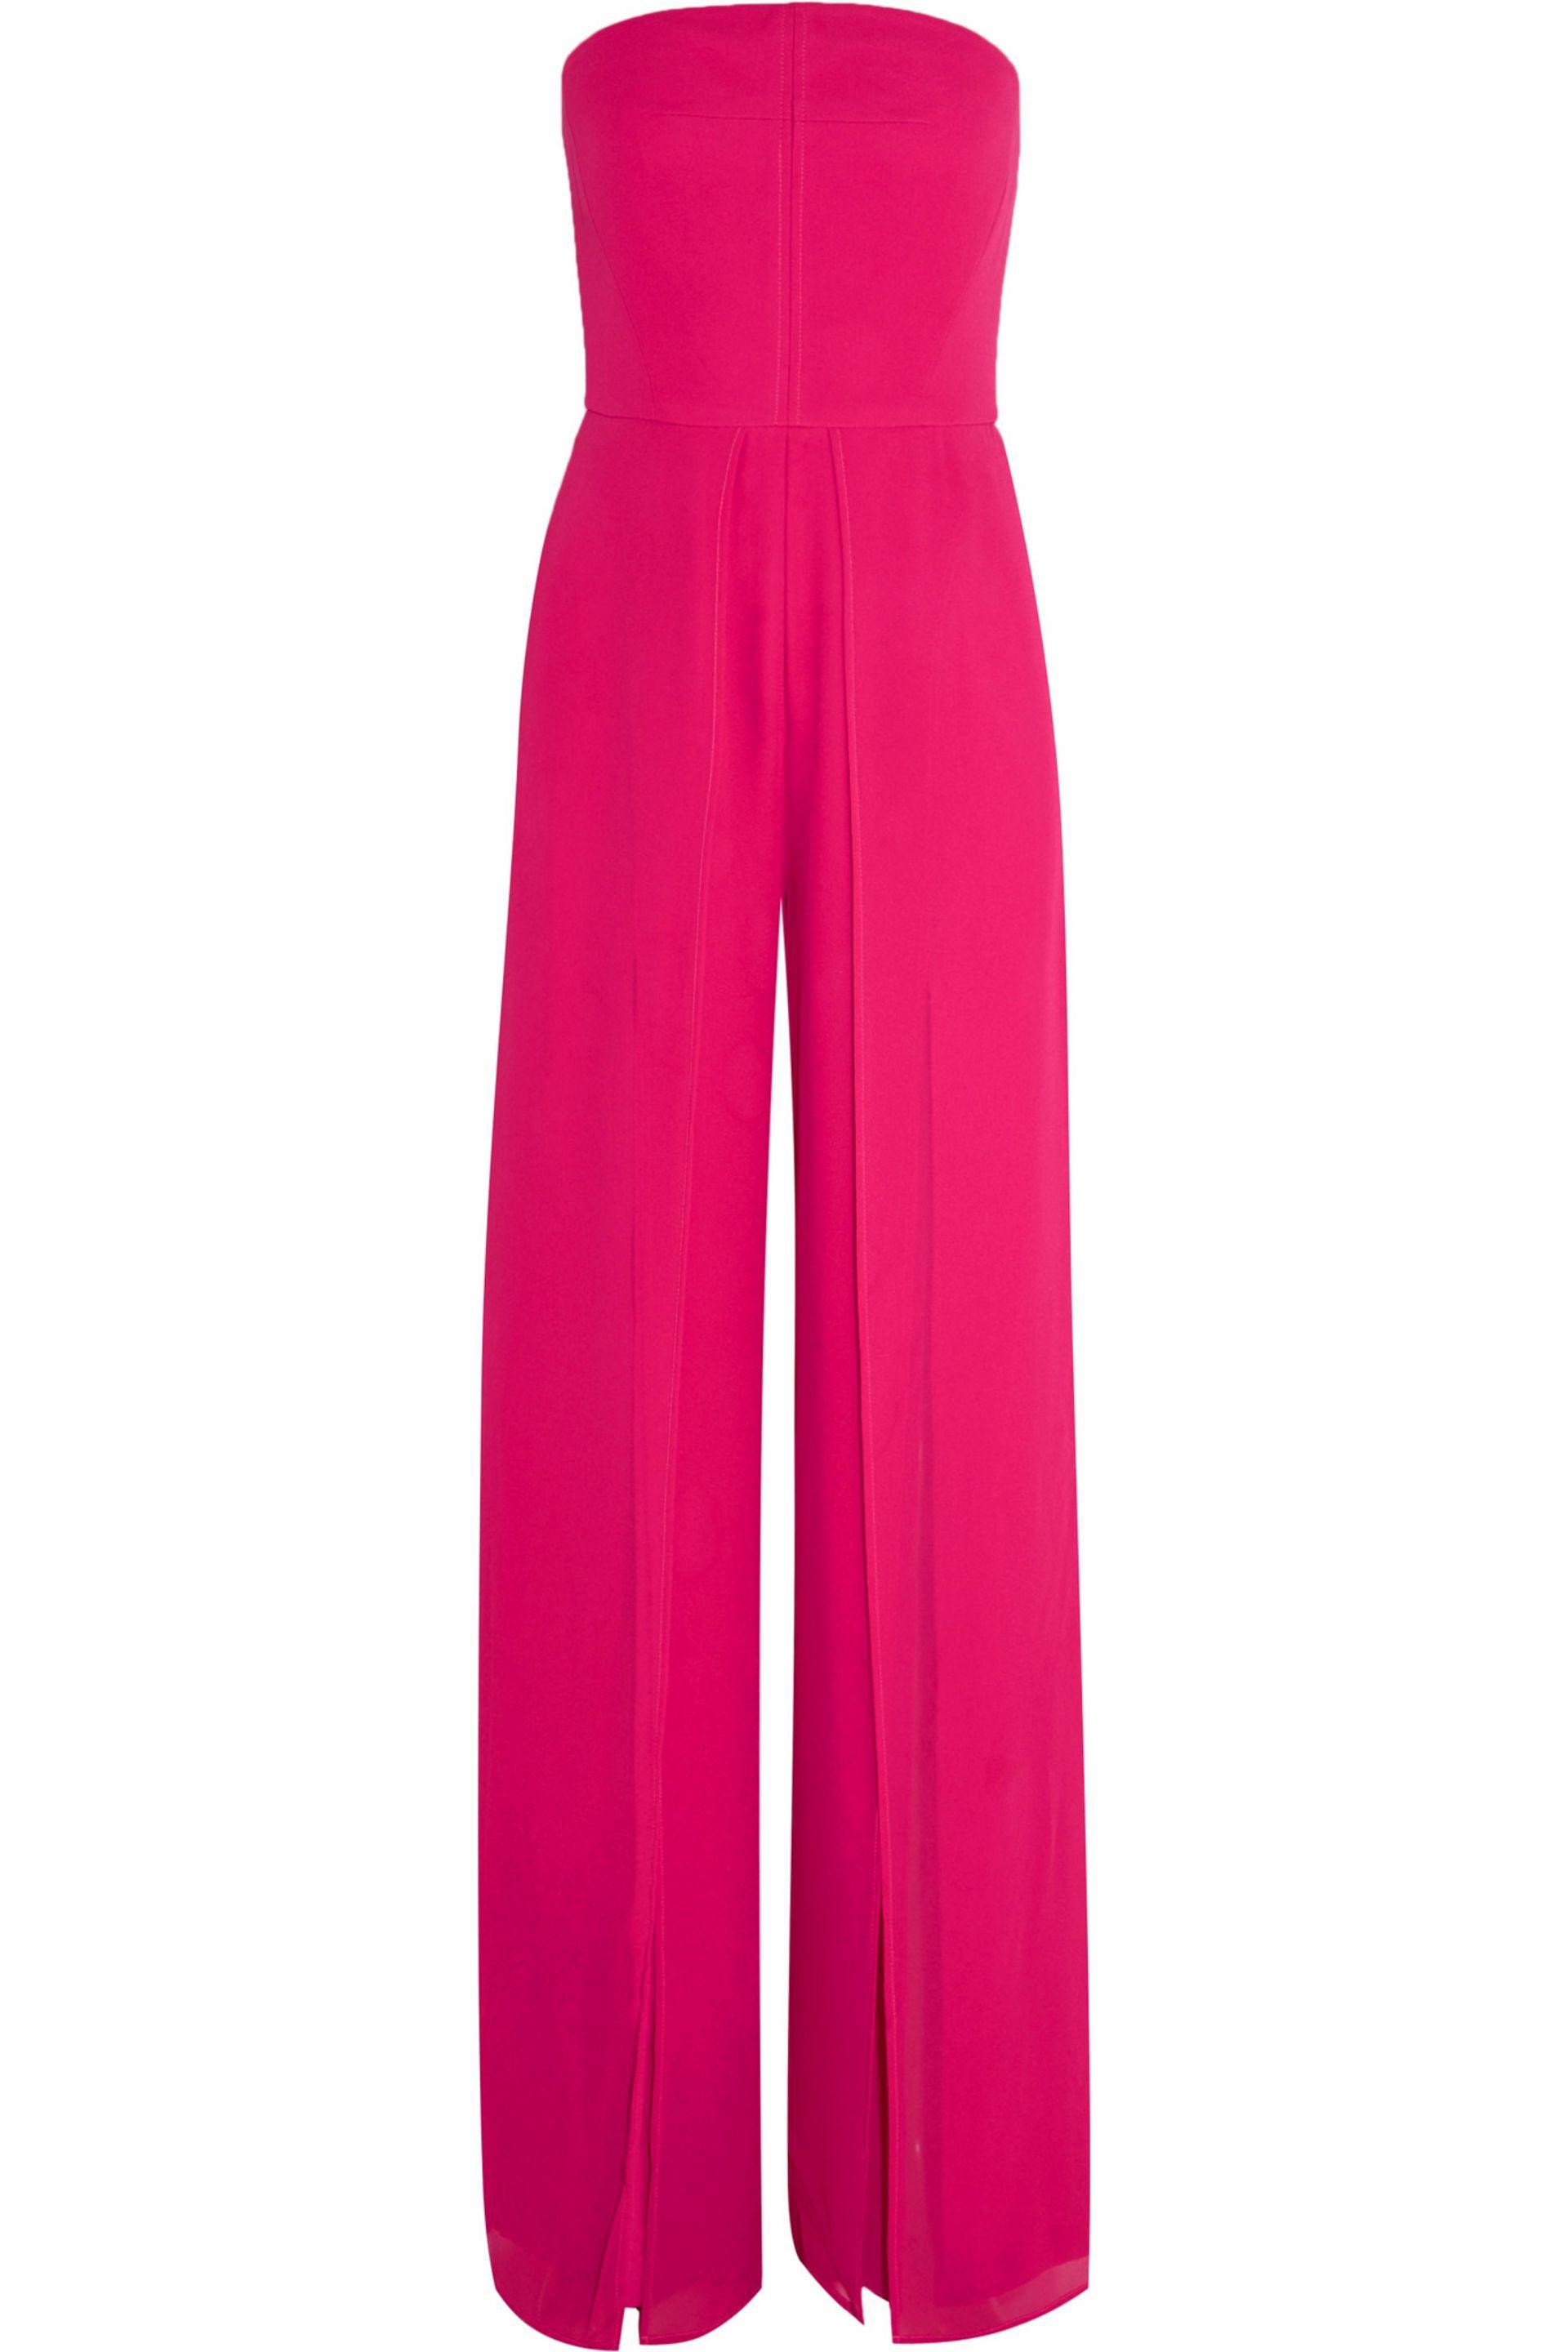 Lyst - Halston Heritage Strapless Georgette Jumpsuit Bright Pink in Pink